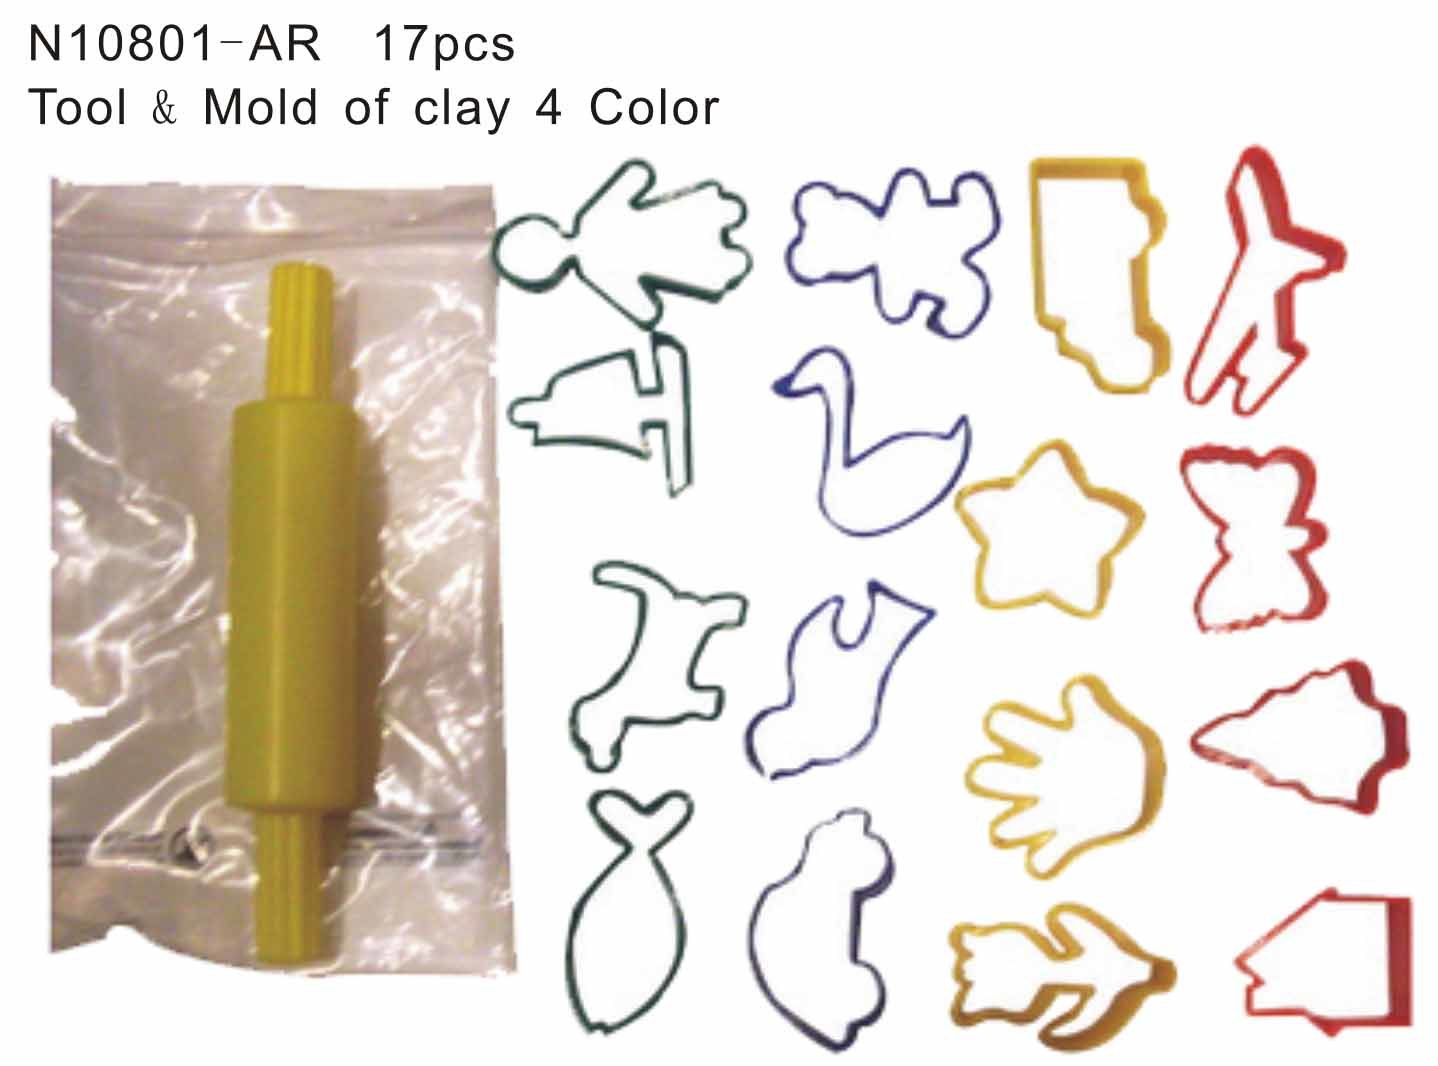 Clay Tool Set, Educational Toys, Tool + Mold of Clay (N10801-AR)